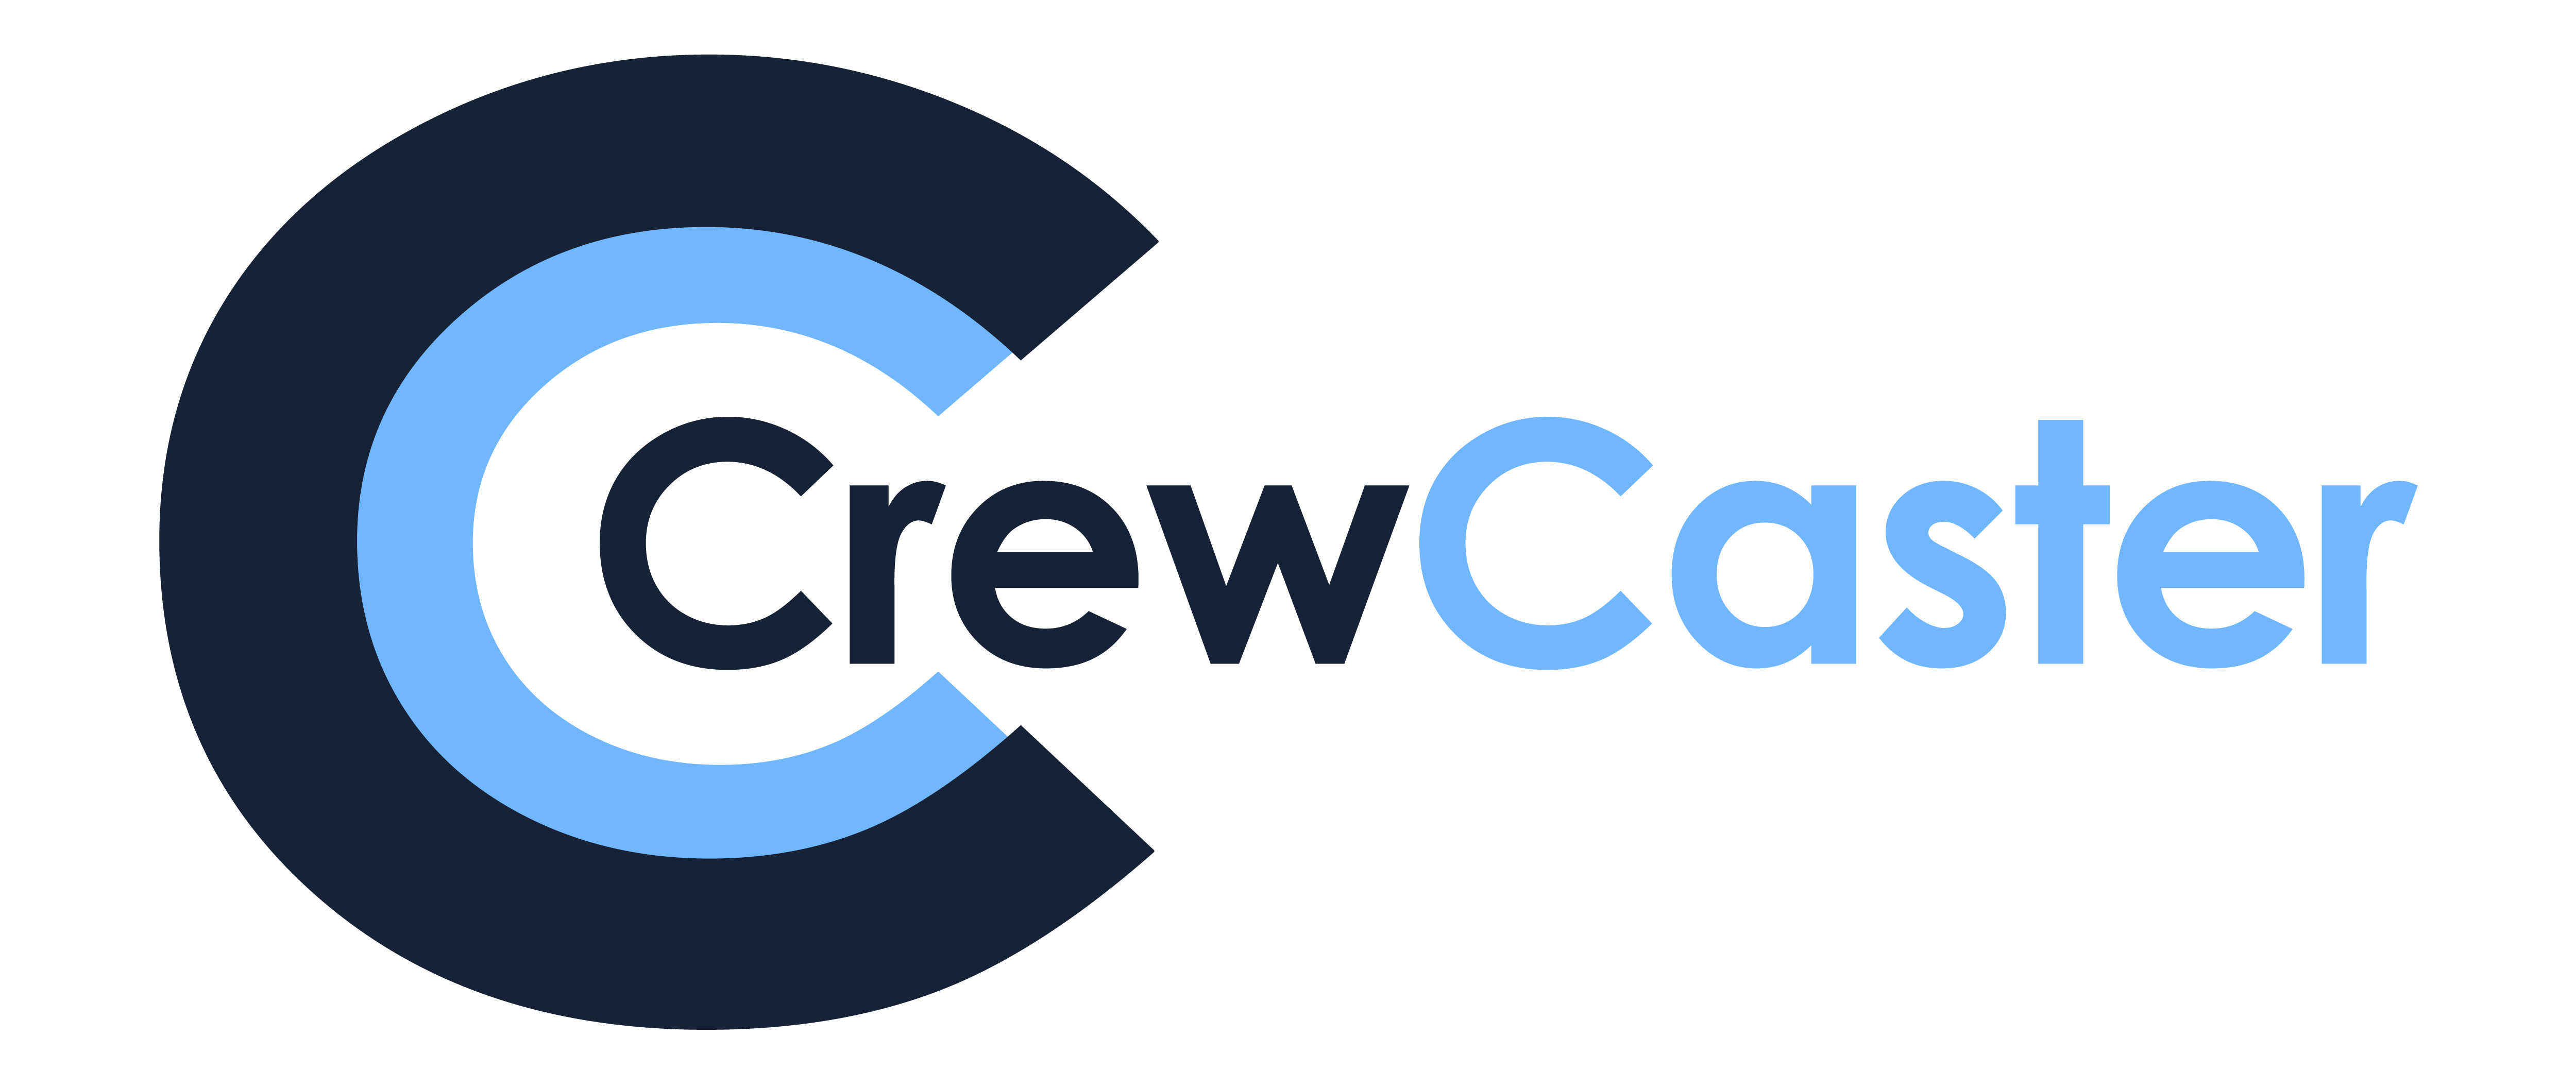 Crew Caster logo